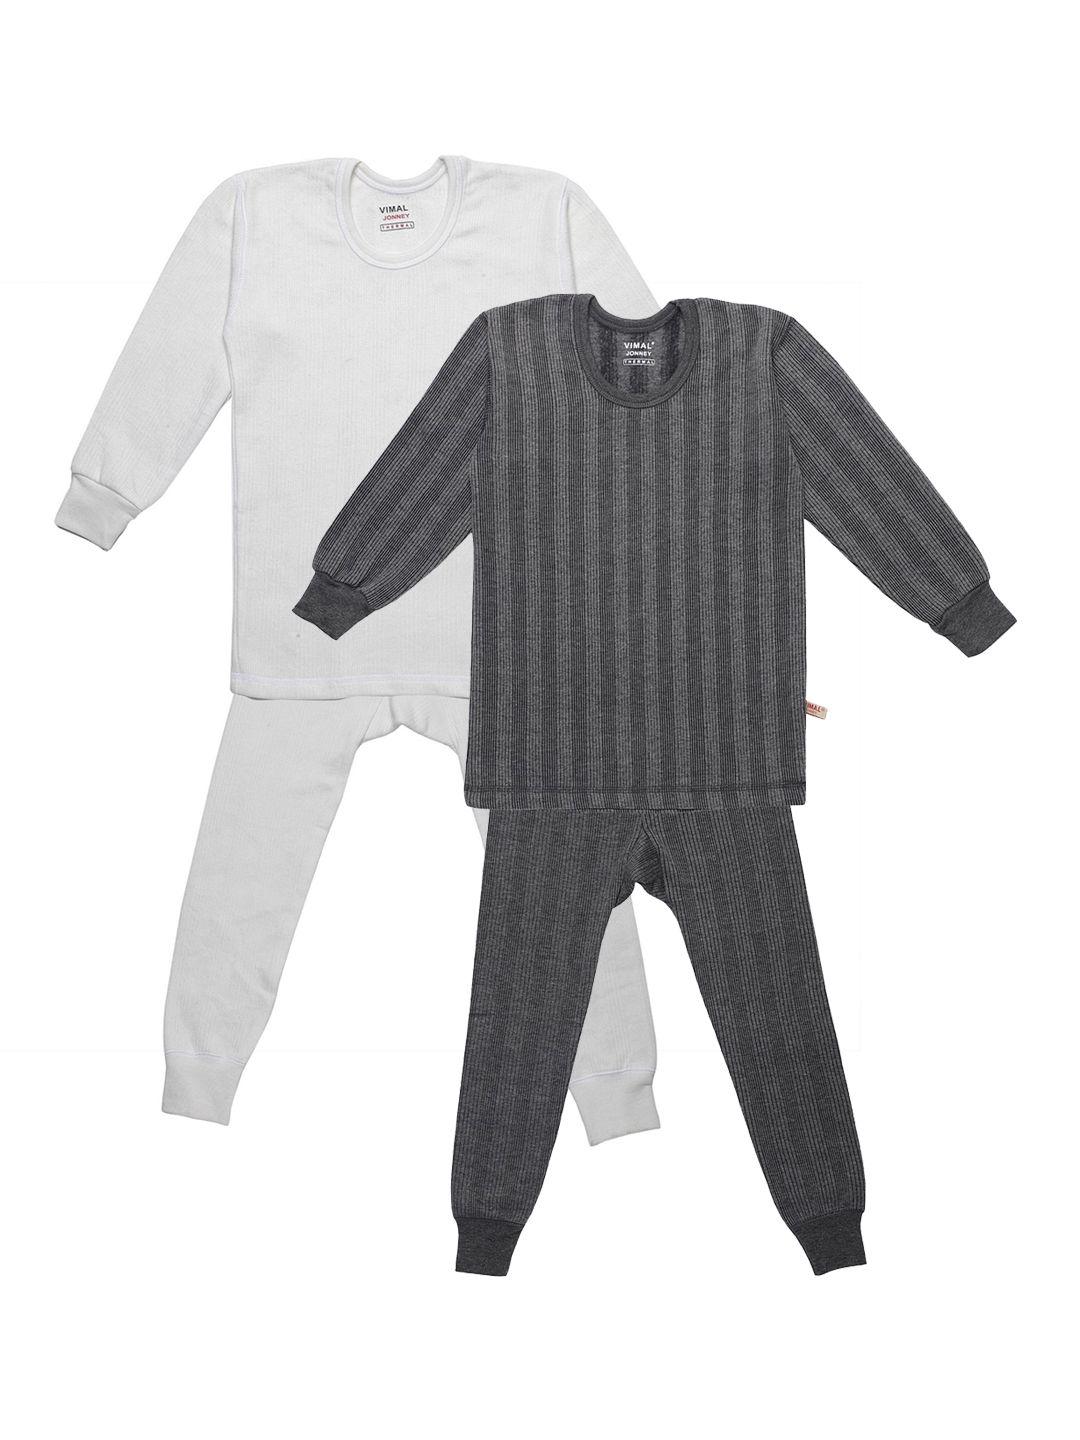 vimal-jonney-kids-pack-of-2-striped-cotton-thermal-sets